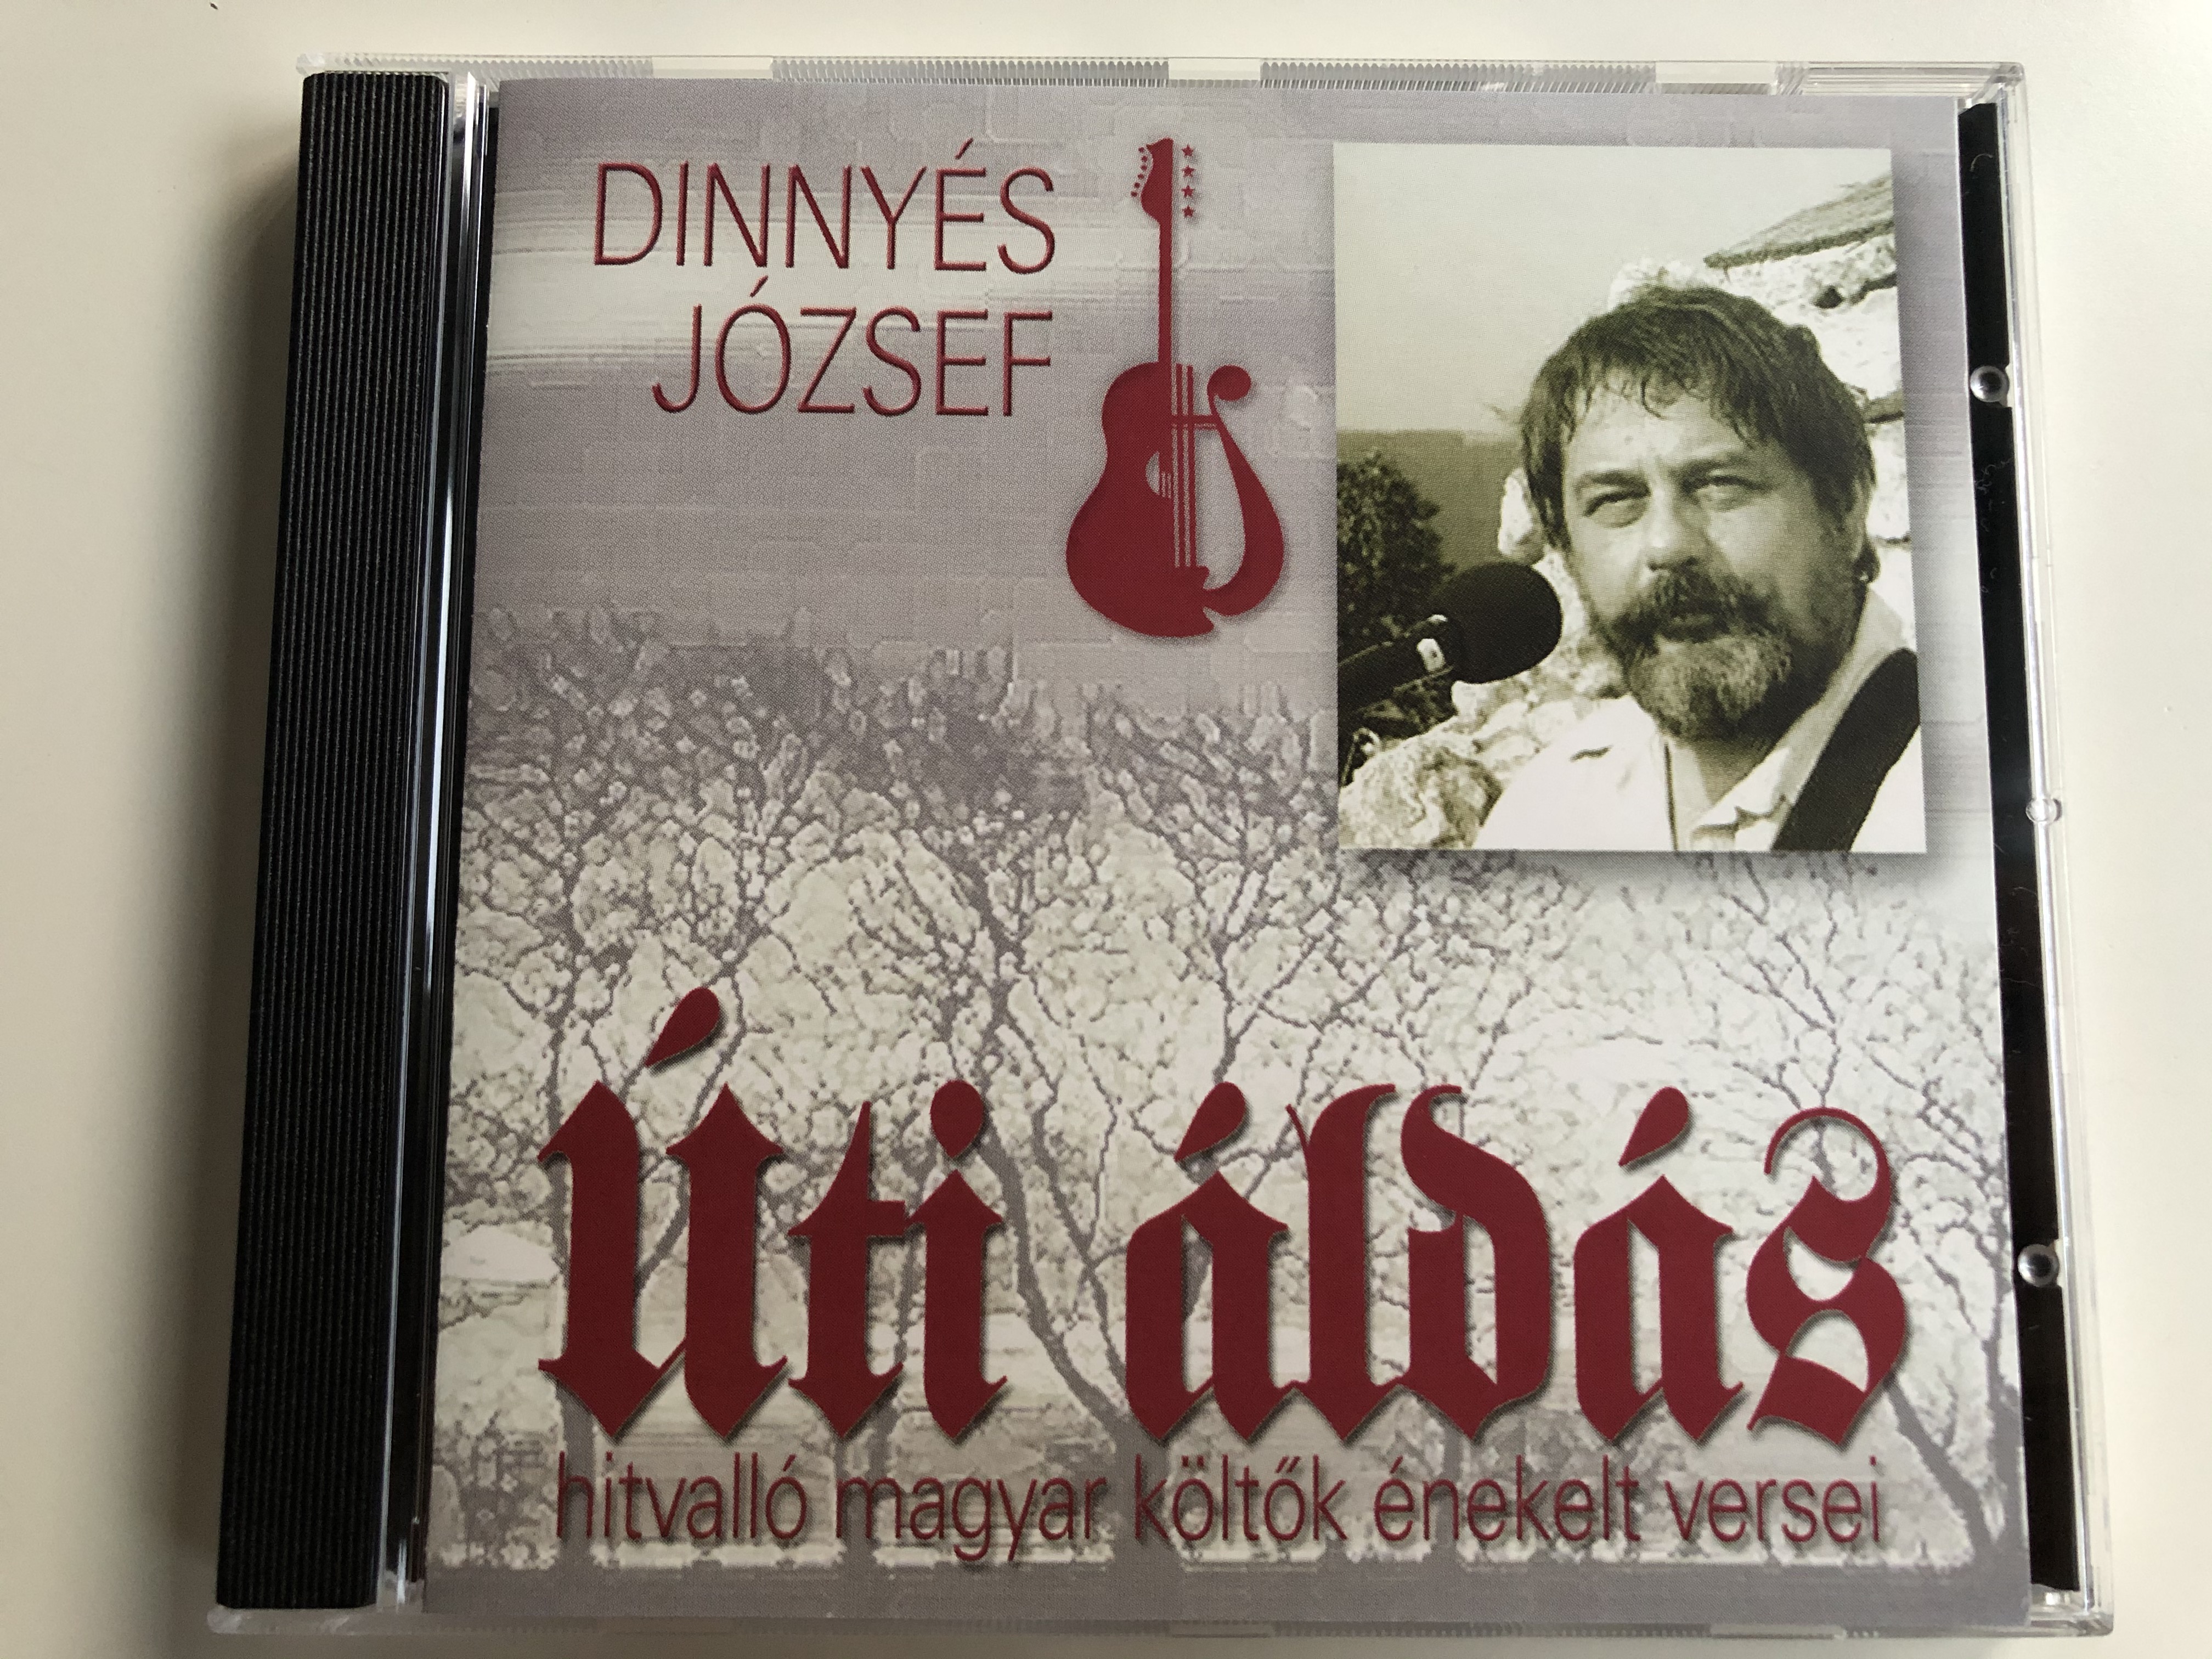 dinnyes-jozsef-uti-aldas-hitvallo-magyar-koltok-enekelt-versei-dinnyes-jozsef-audio-cd-2003-dj-2003-10-1-.jpg